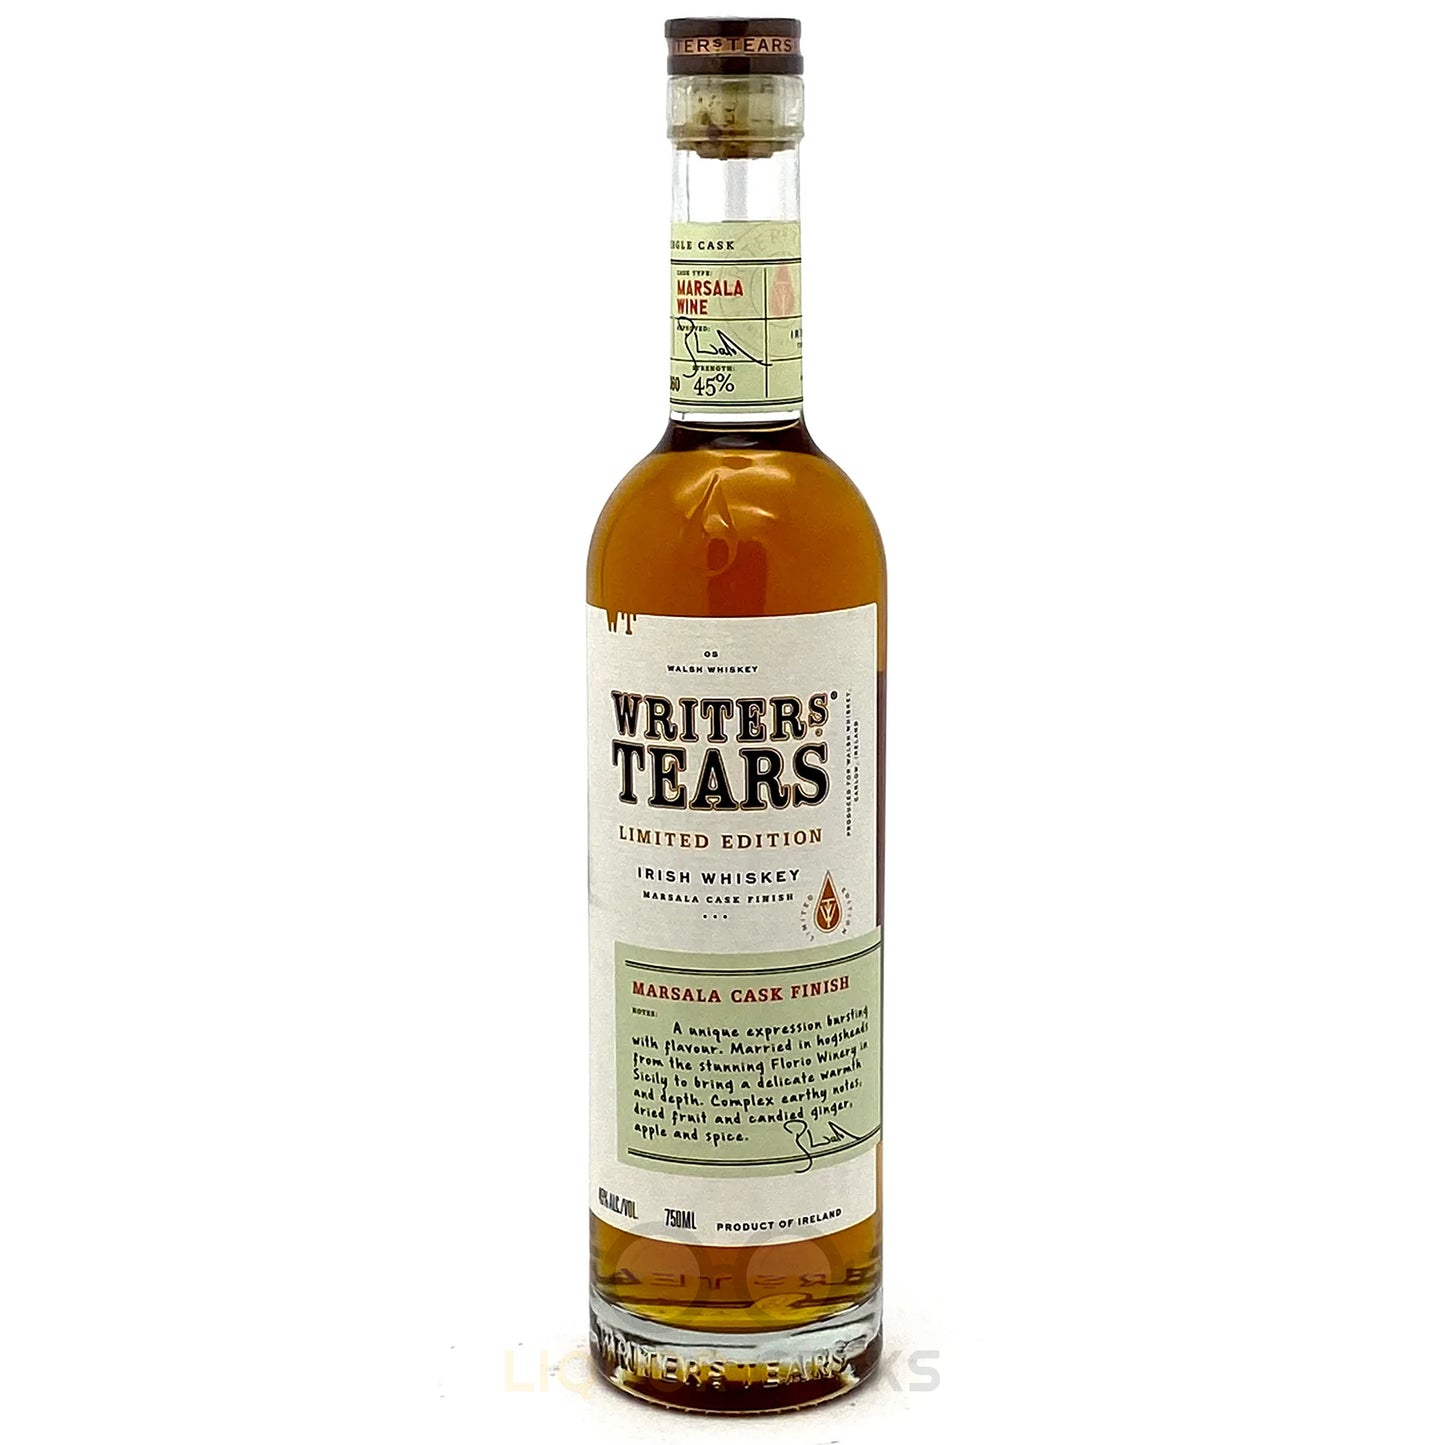 Writers Tears Blended Irish Whiskey Marsala Cask Finish Limited Edition - Liquor Geeks